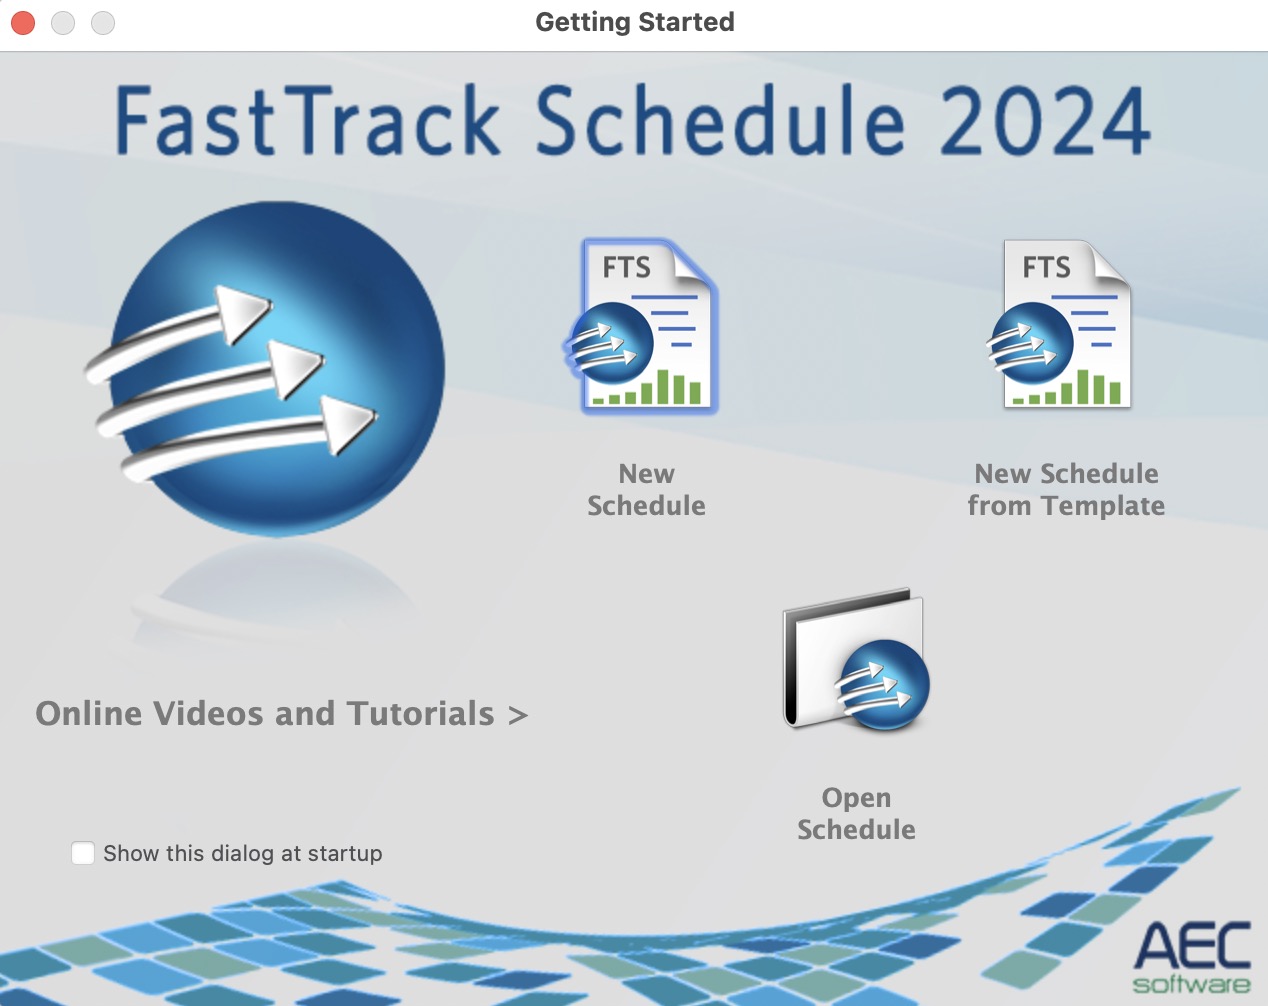 FastTrack Schedule 2024 Getting Started